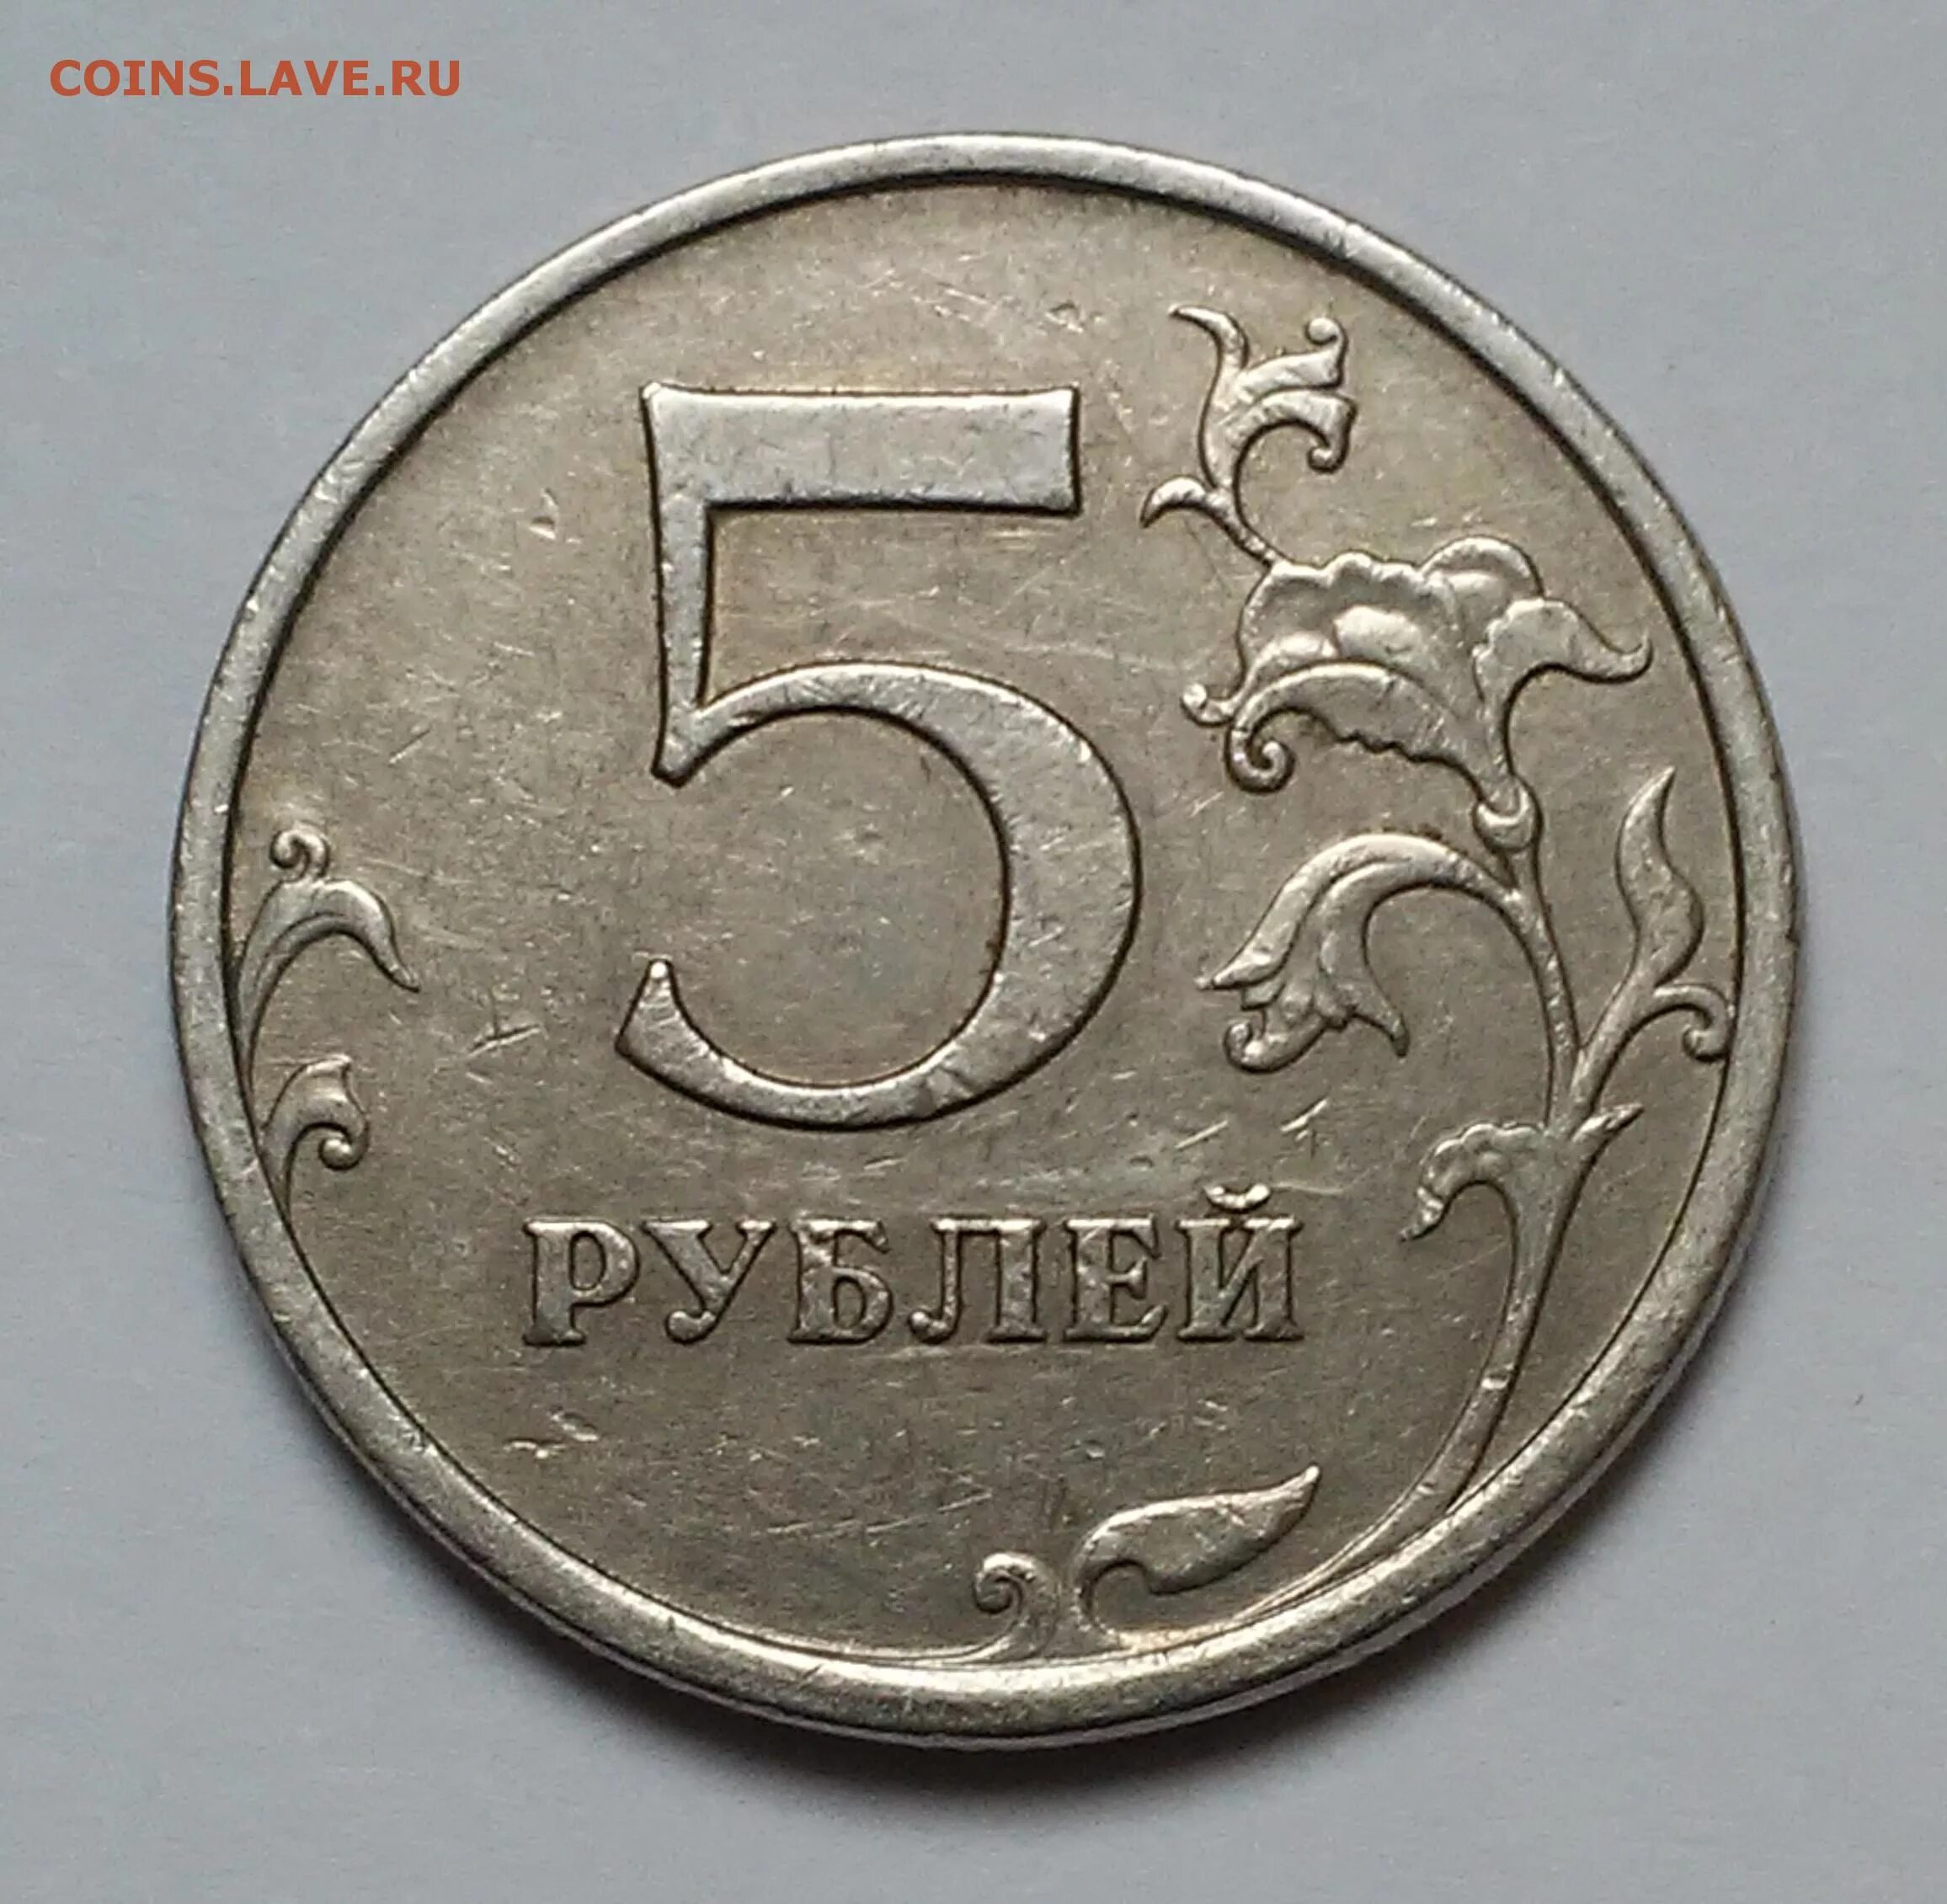 5 рублей 11 года. Монета 5 рублей 2003 года. Есть 5 рублей. Пять и десять рублей 1997 года.